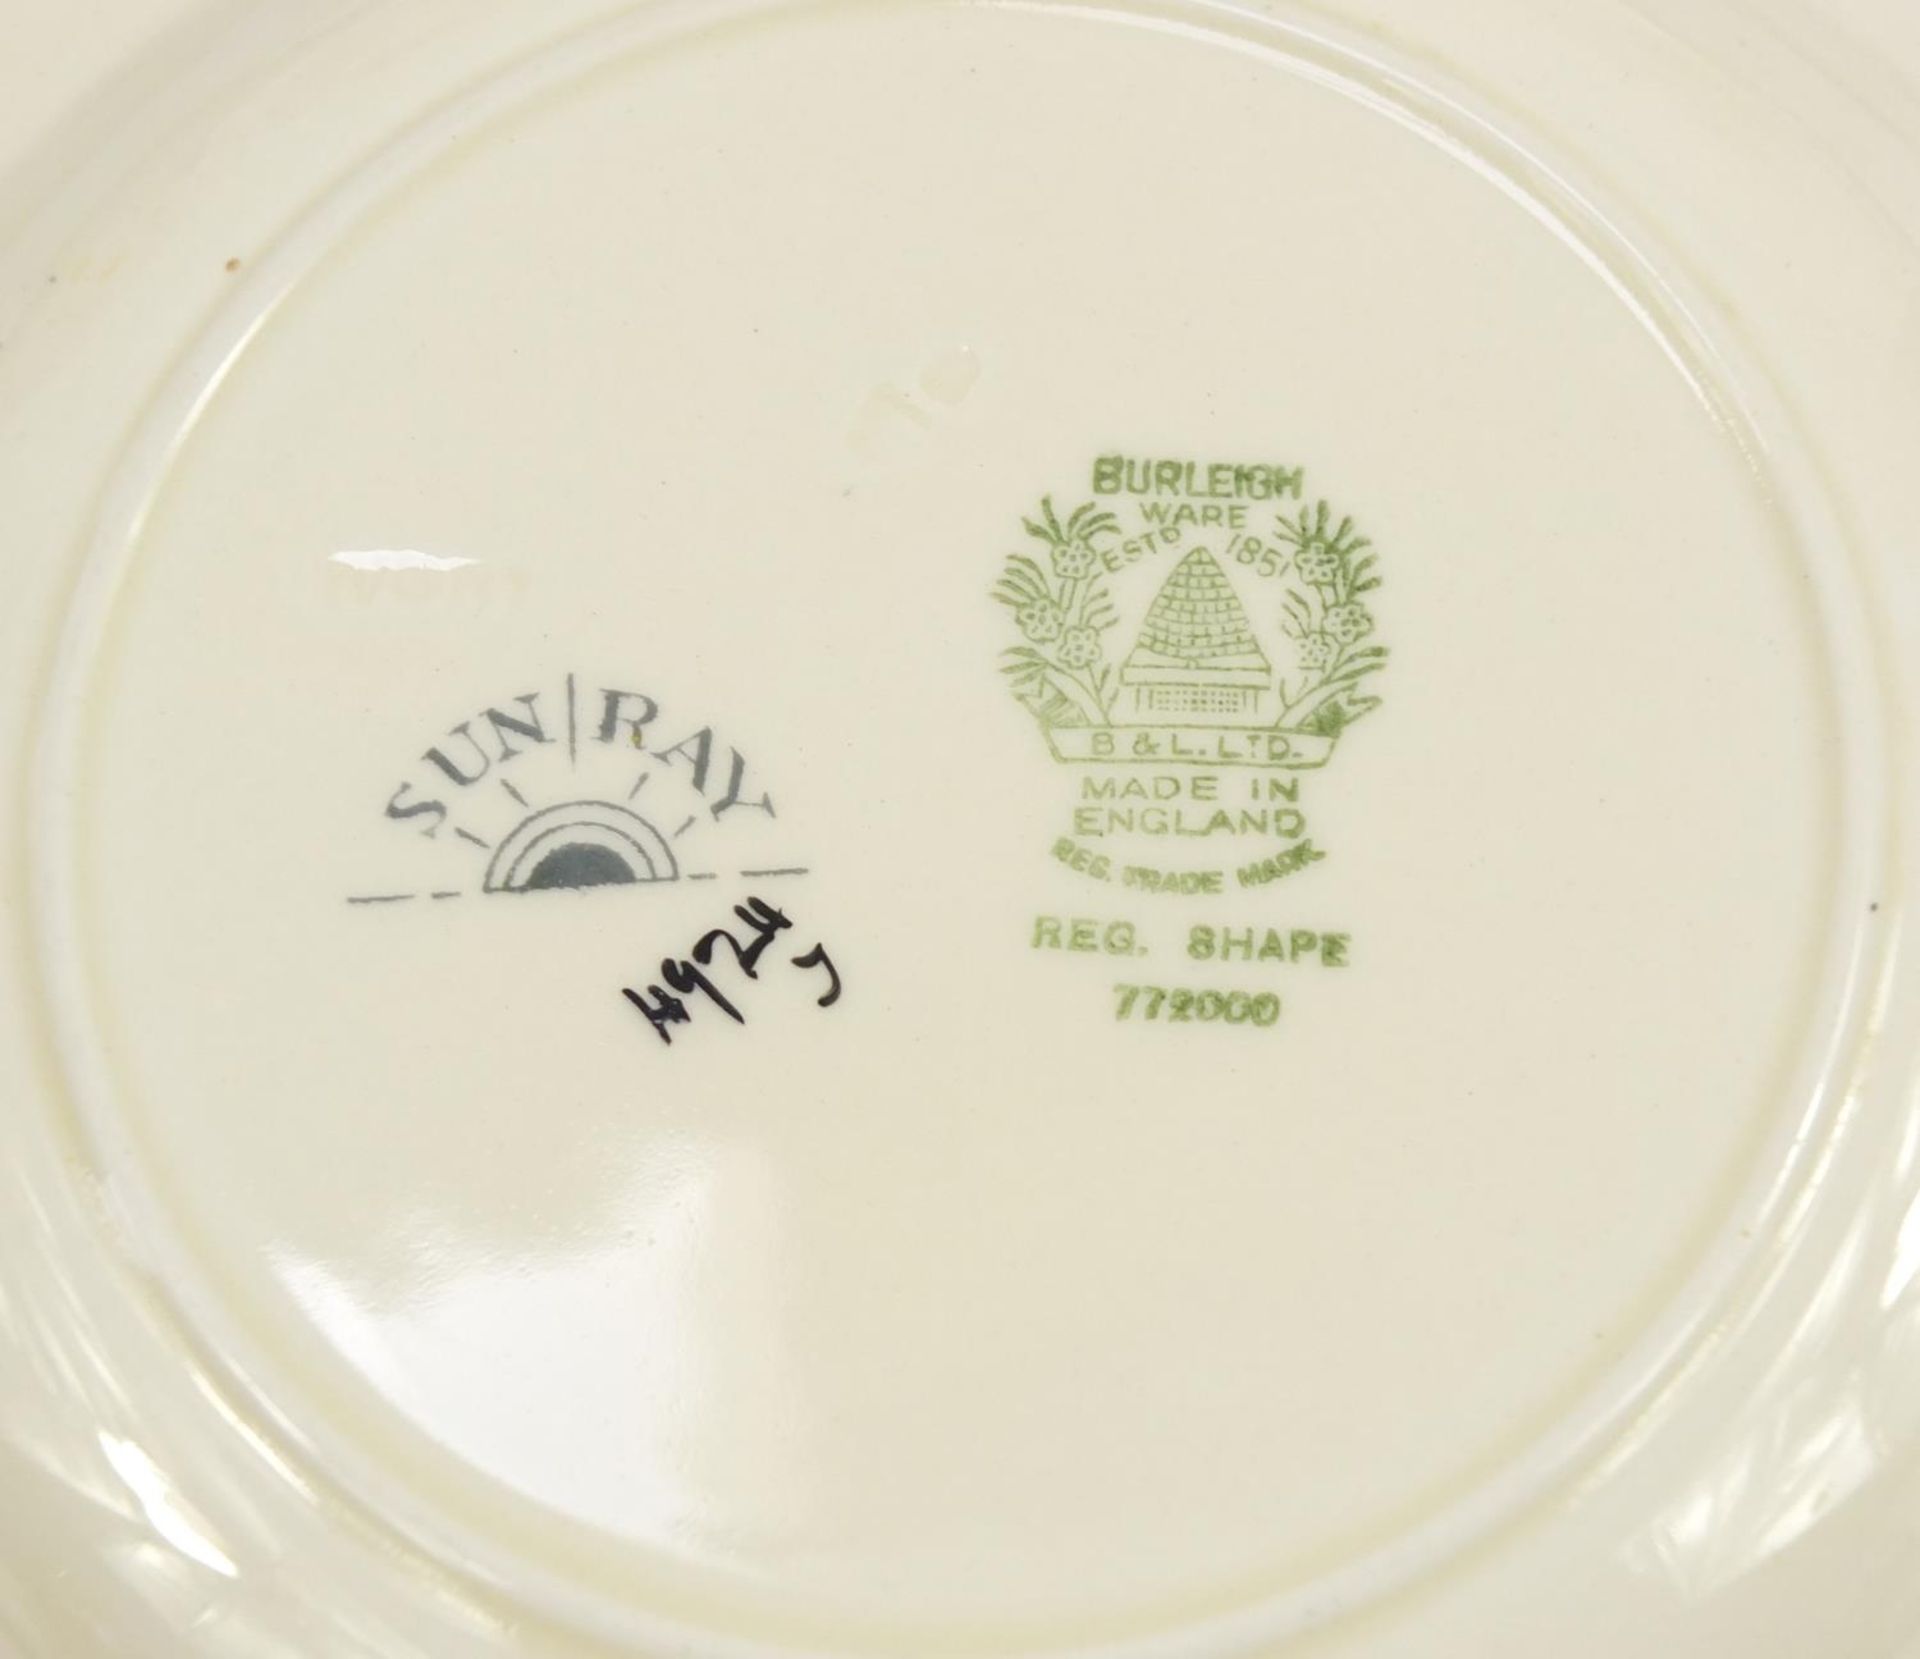 Art Deco Burleigh Ware Sun Ray dinner ware, reg shape 772000, including meat platter and lidded - Bild 4 aus 4